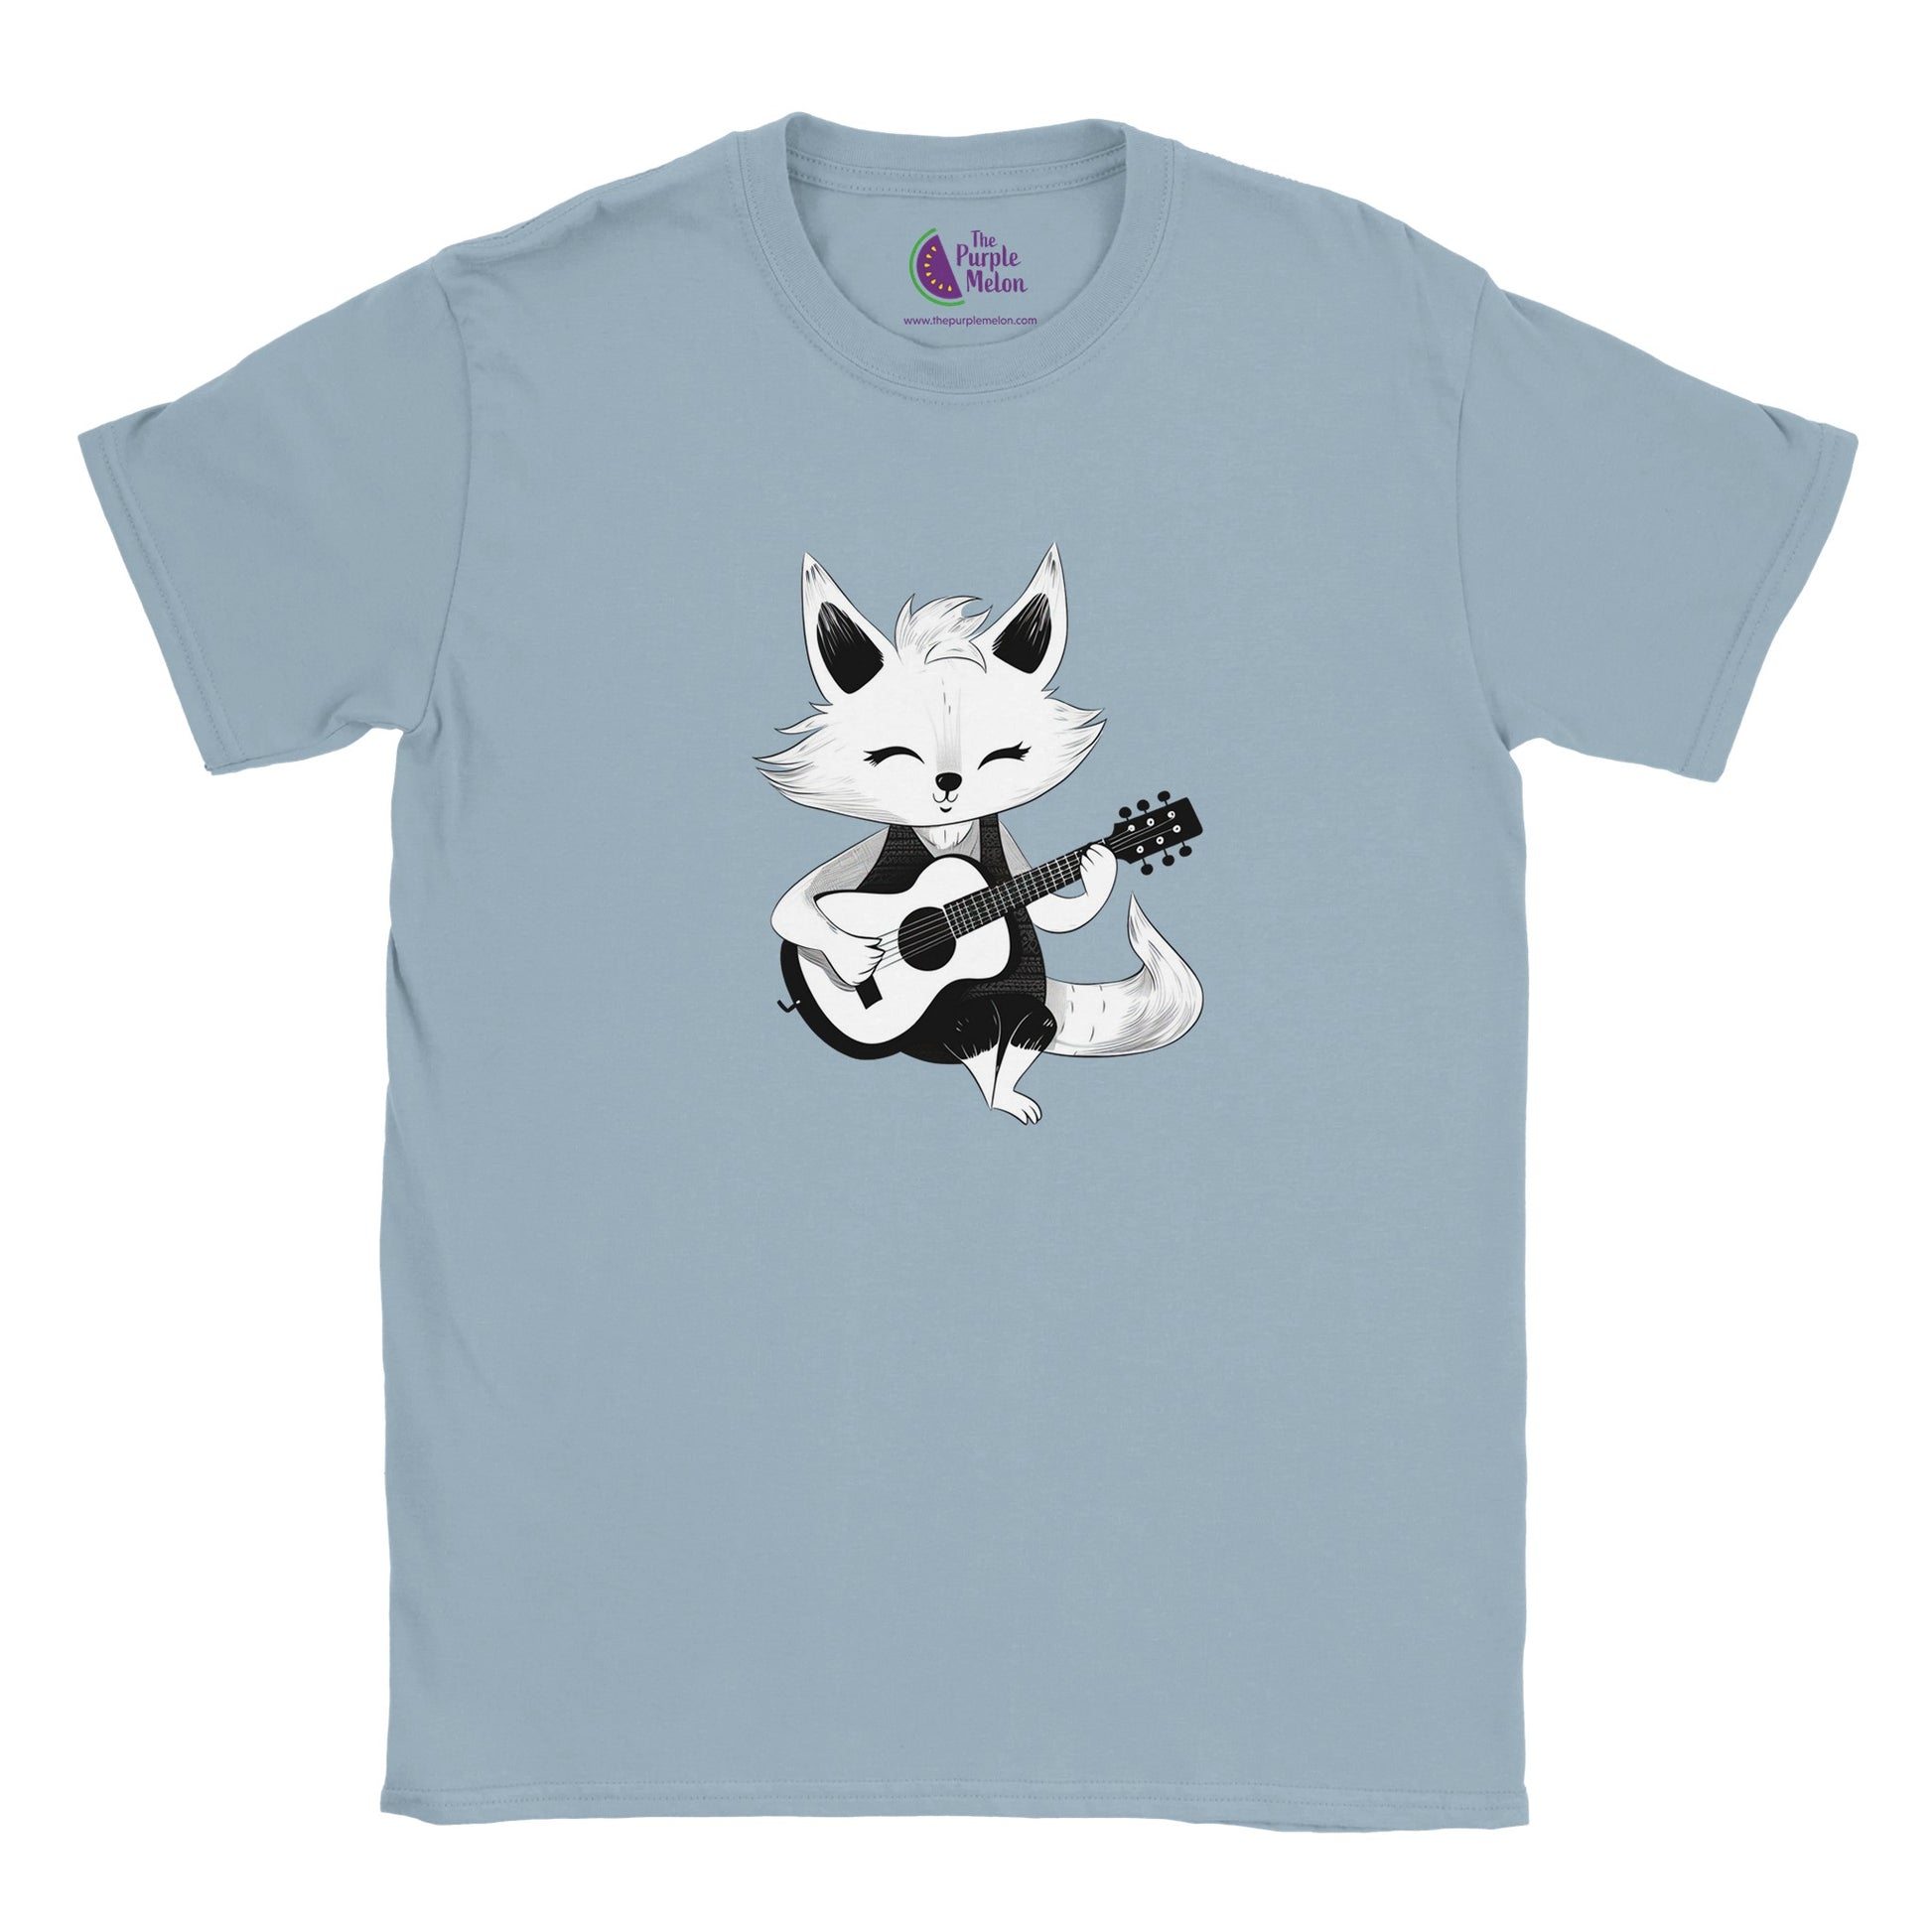 light blue kids t-shirt with cute fox playing guitar print